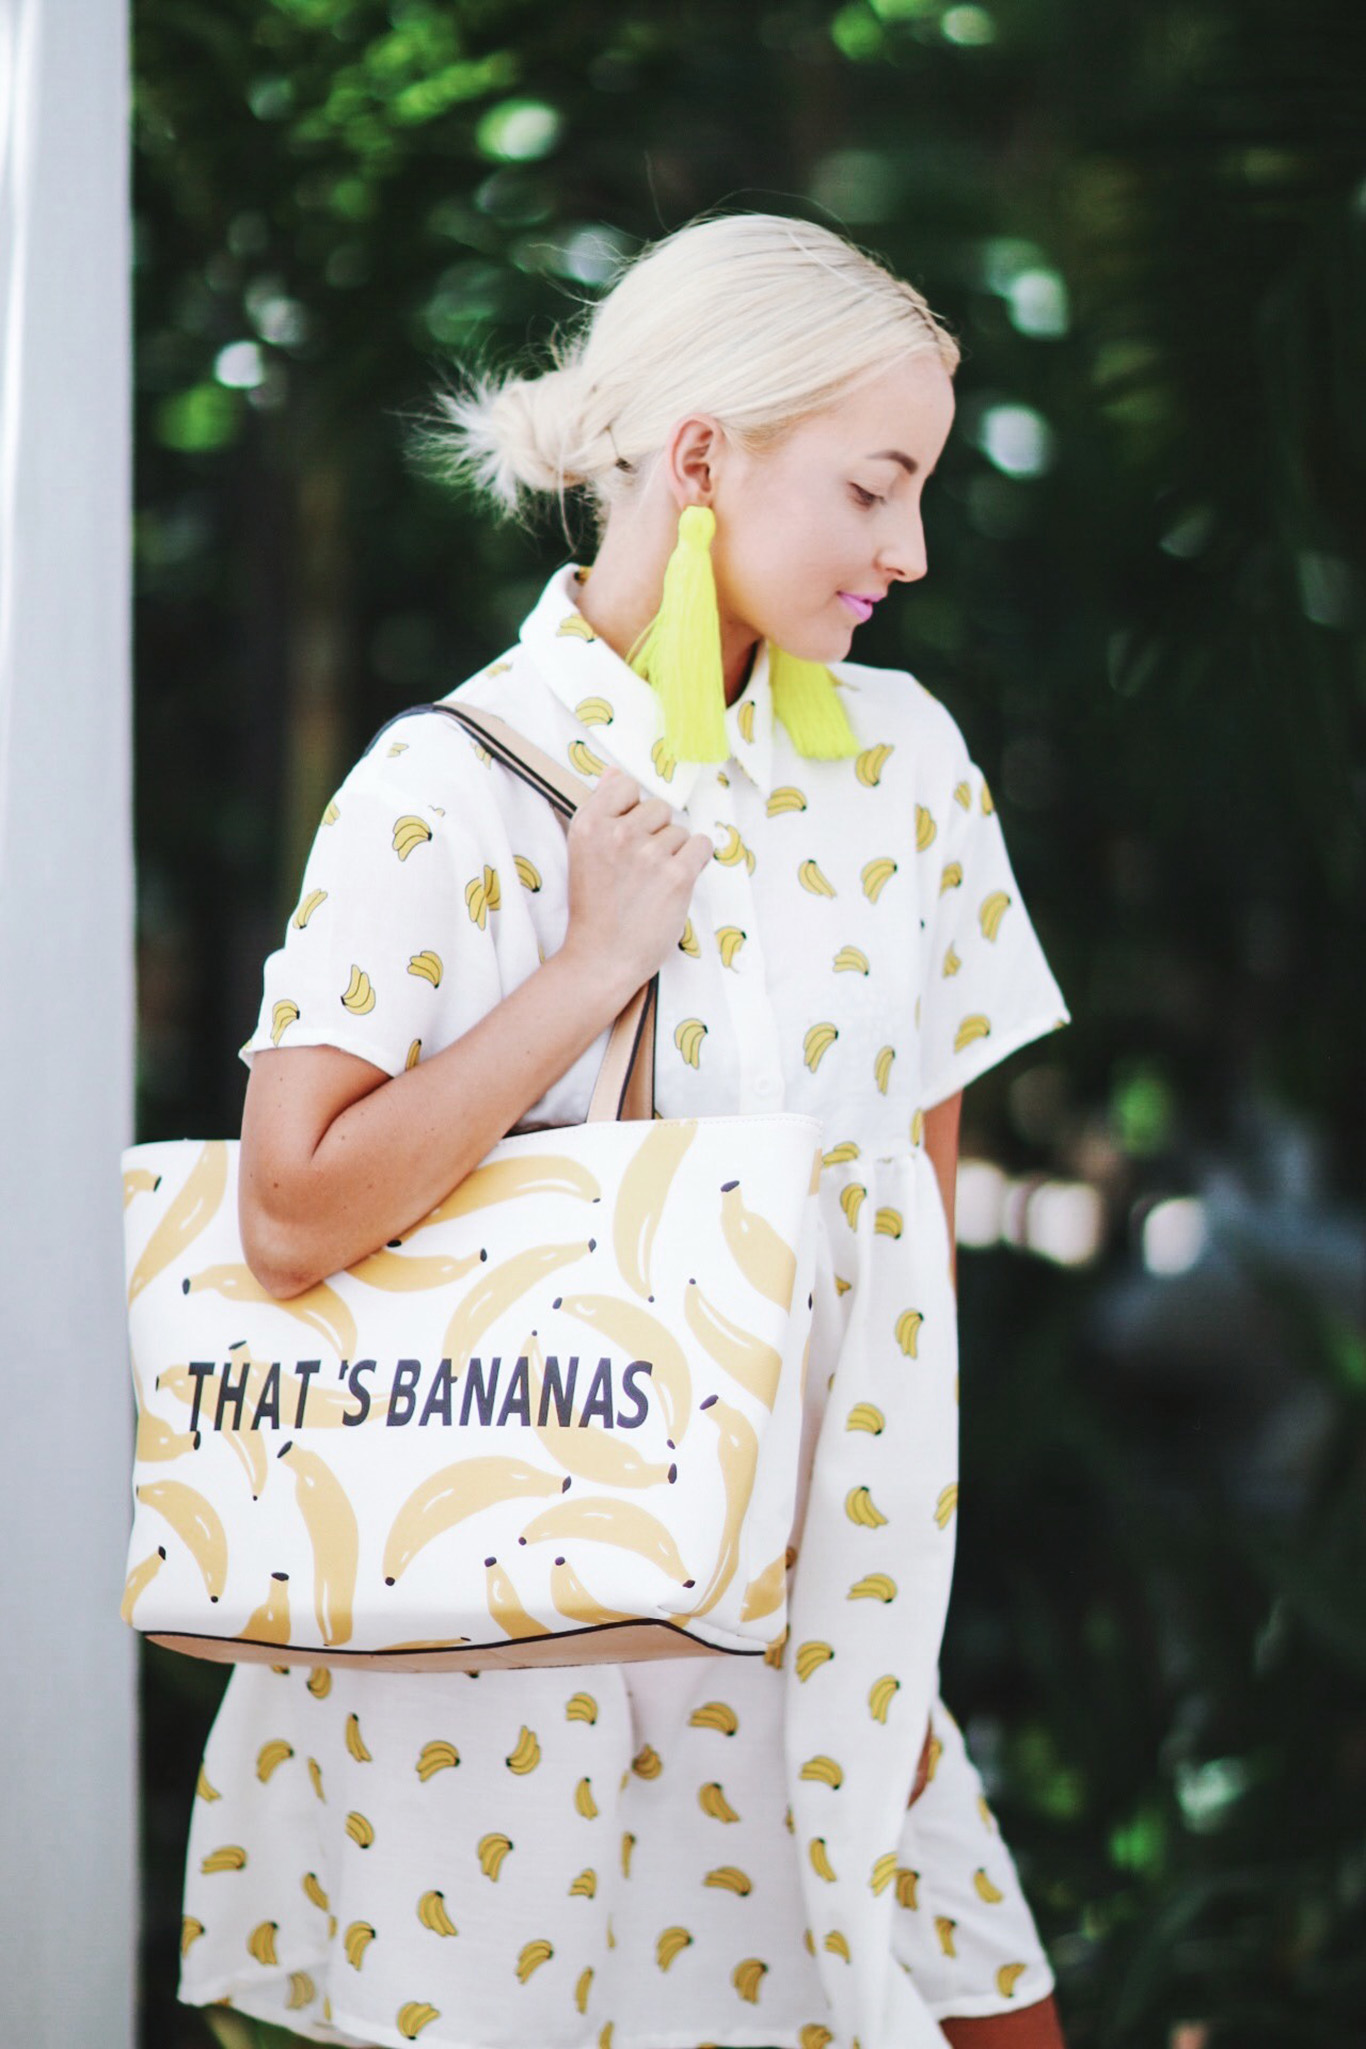 Alena Gidenko of modaprints.com styles a banana dress with pink sandals and a bannana bag